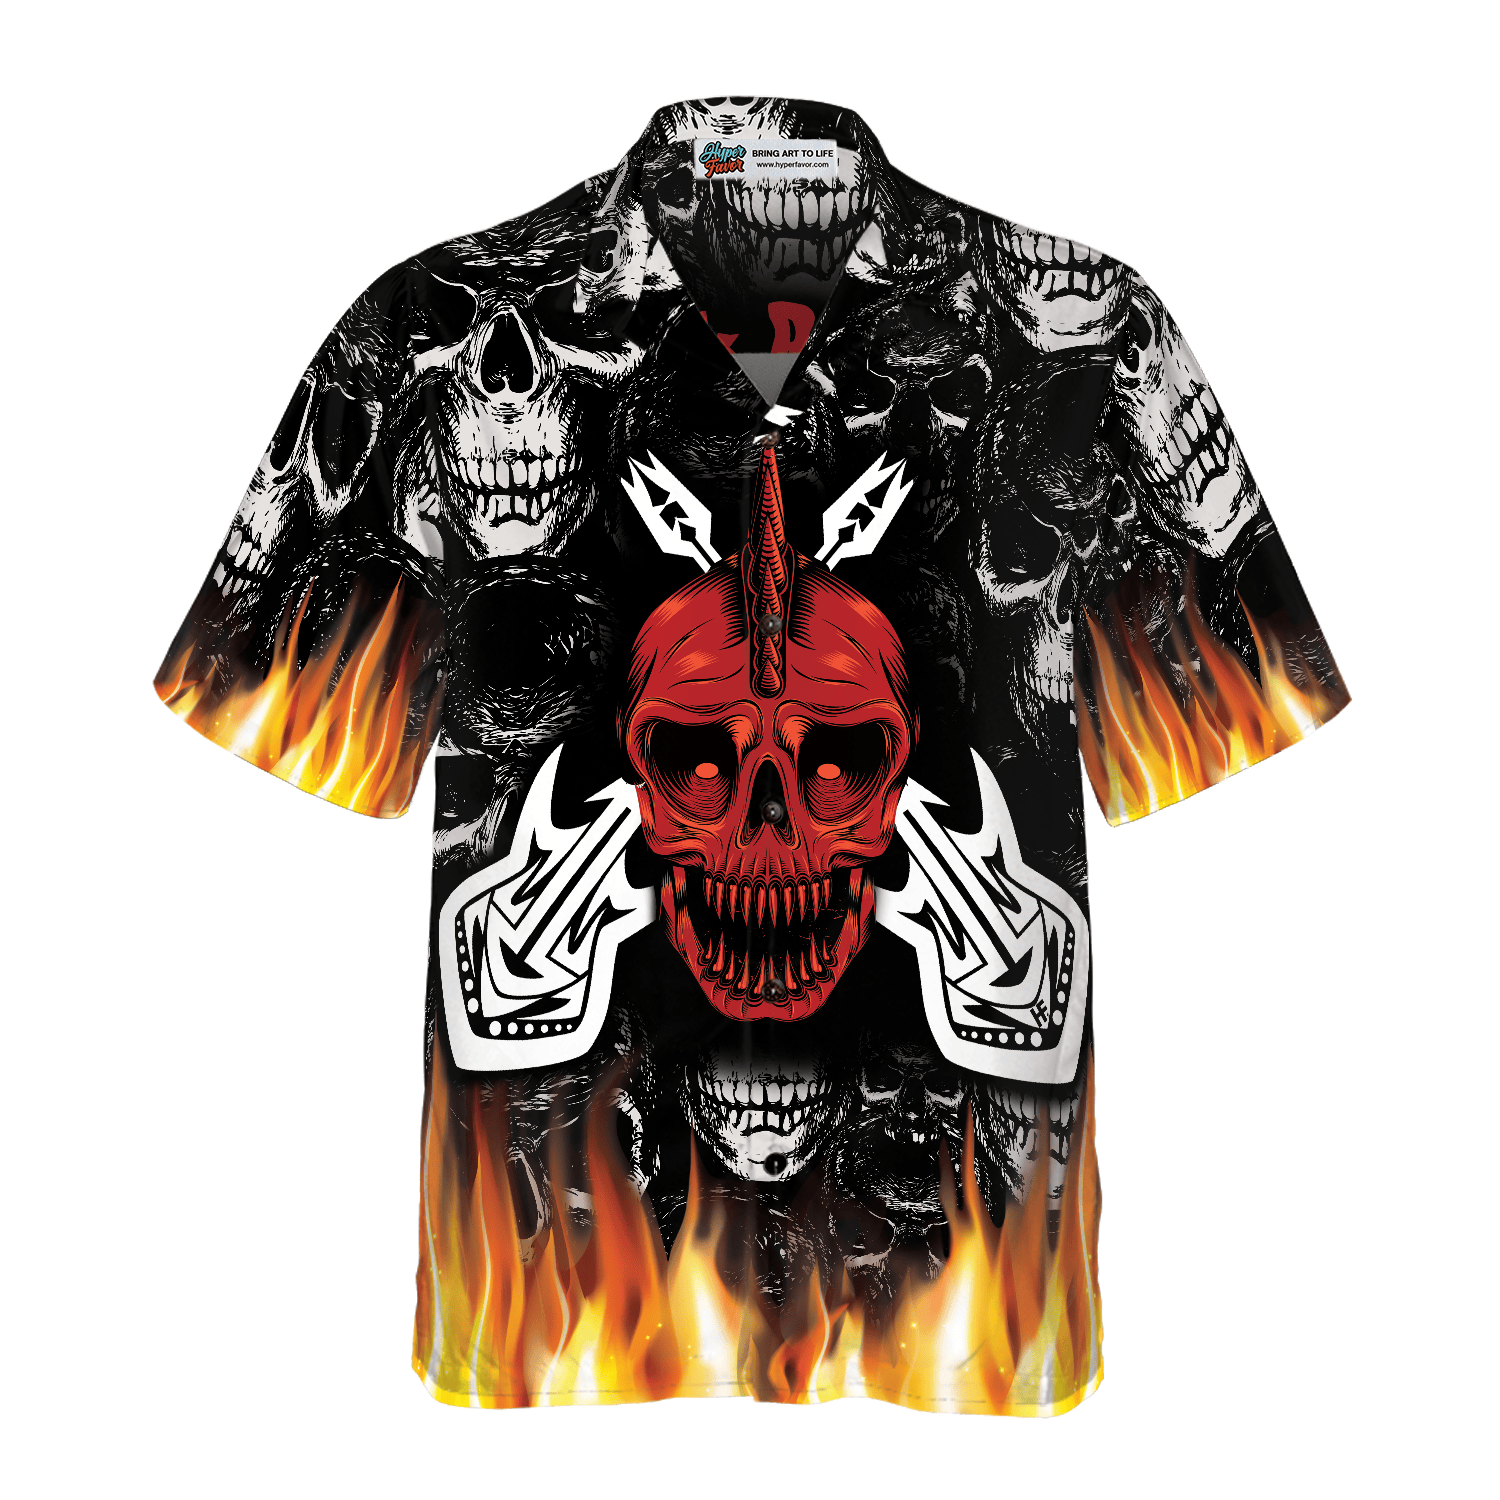 Punk Rock Never Dies Gothic Hawaiian Shirt, Flame Electric Guitar Crossbones And Skull Hawaiian Shirt